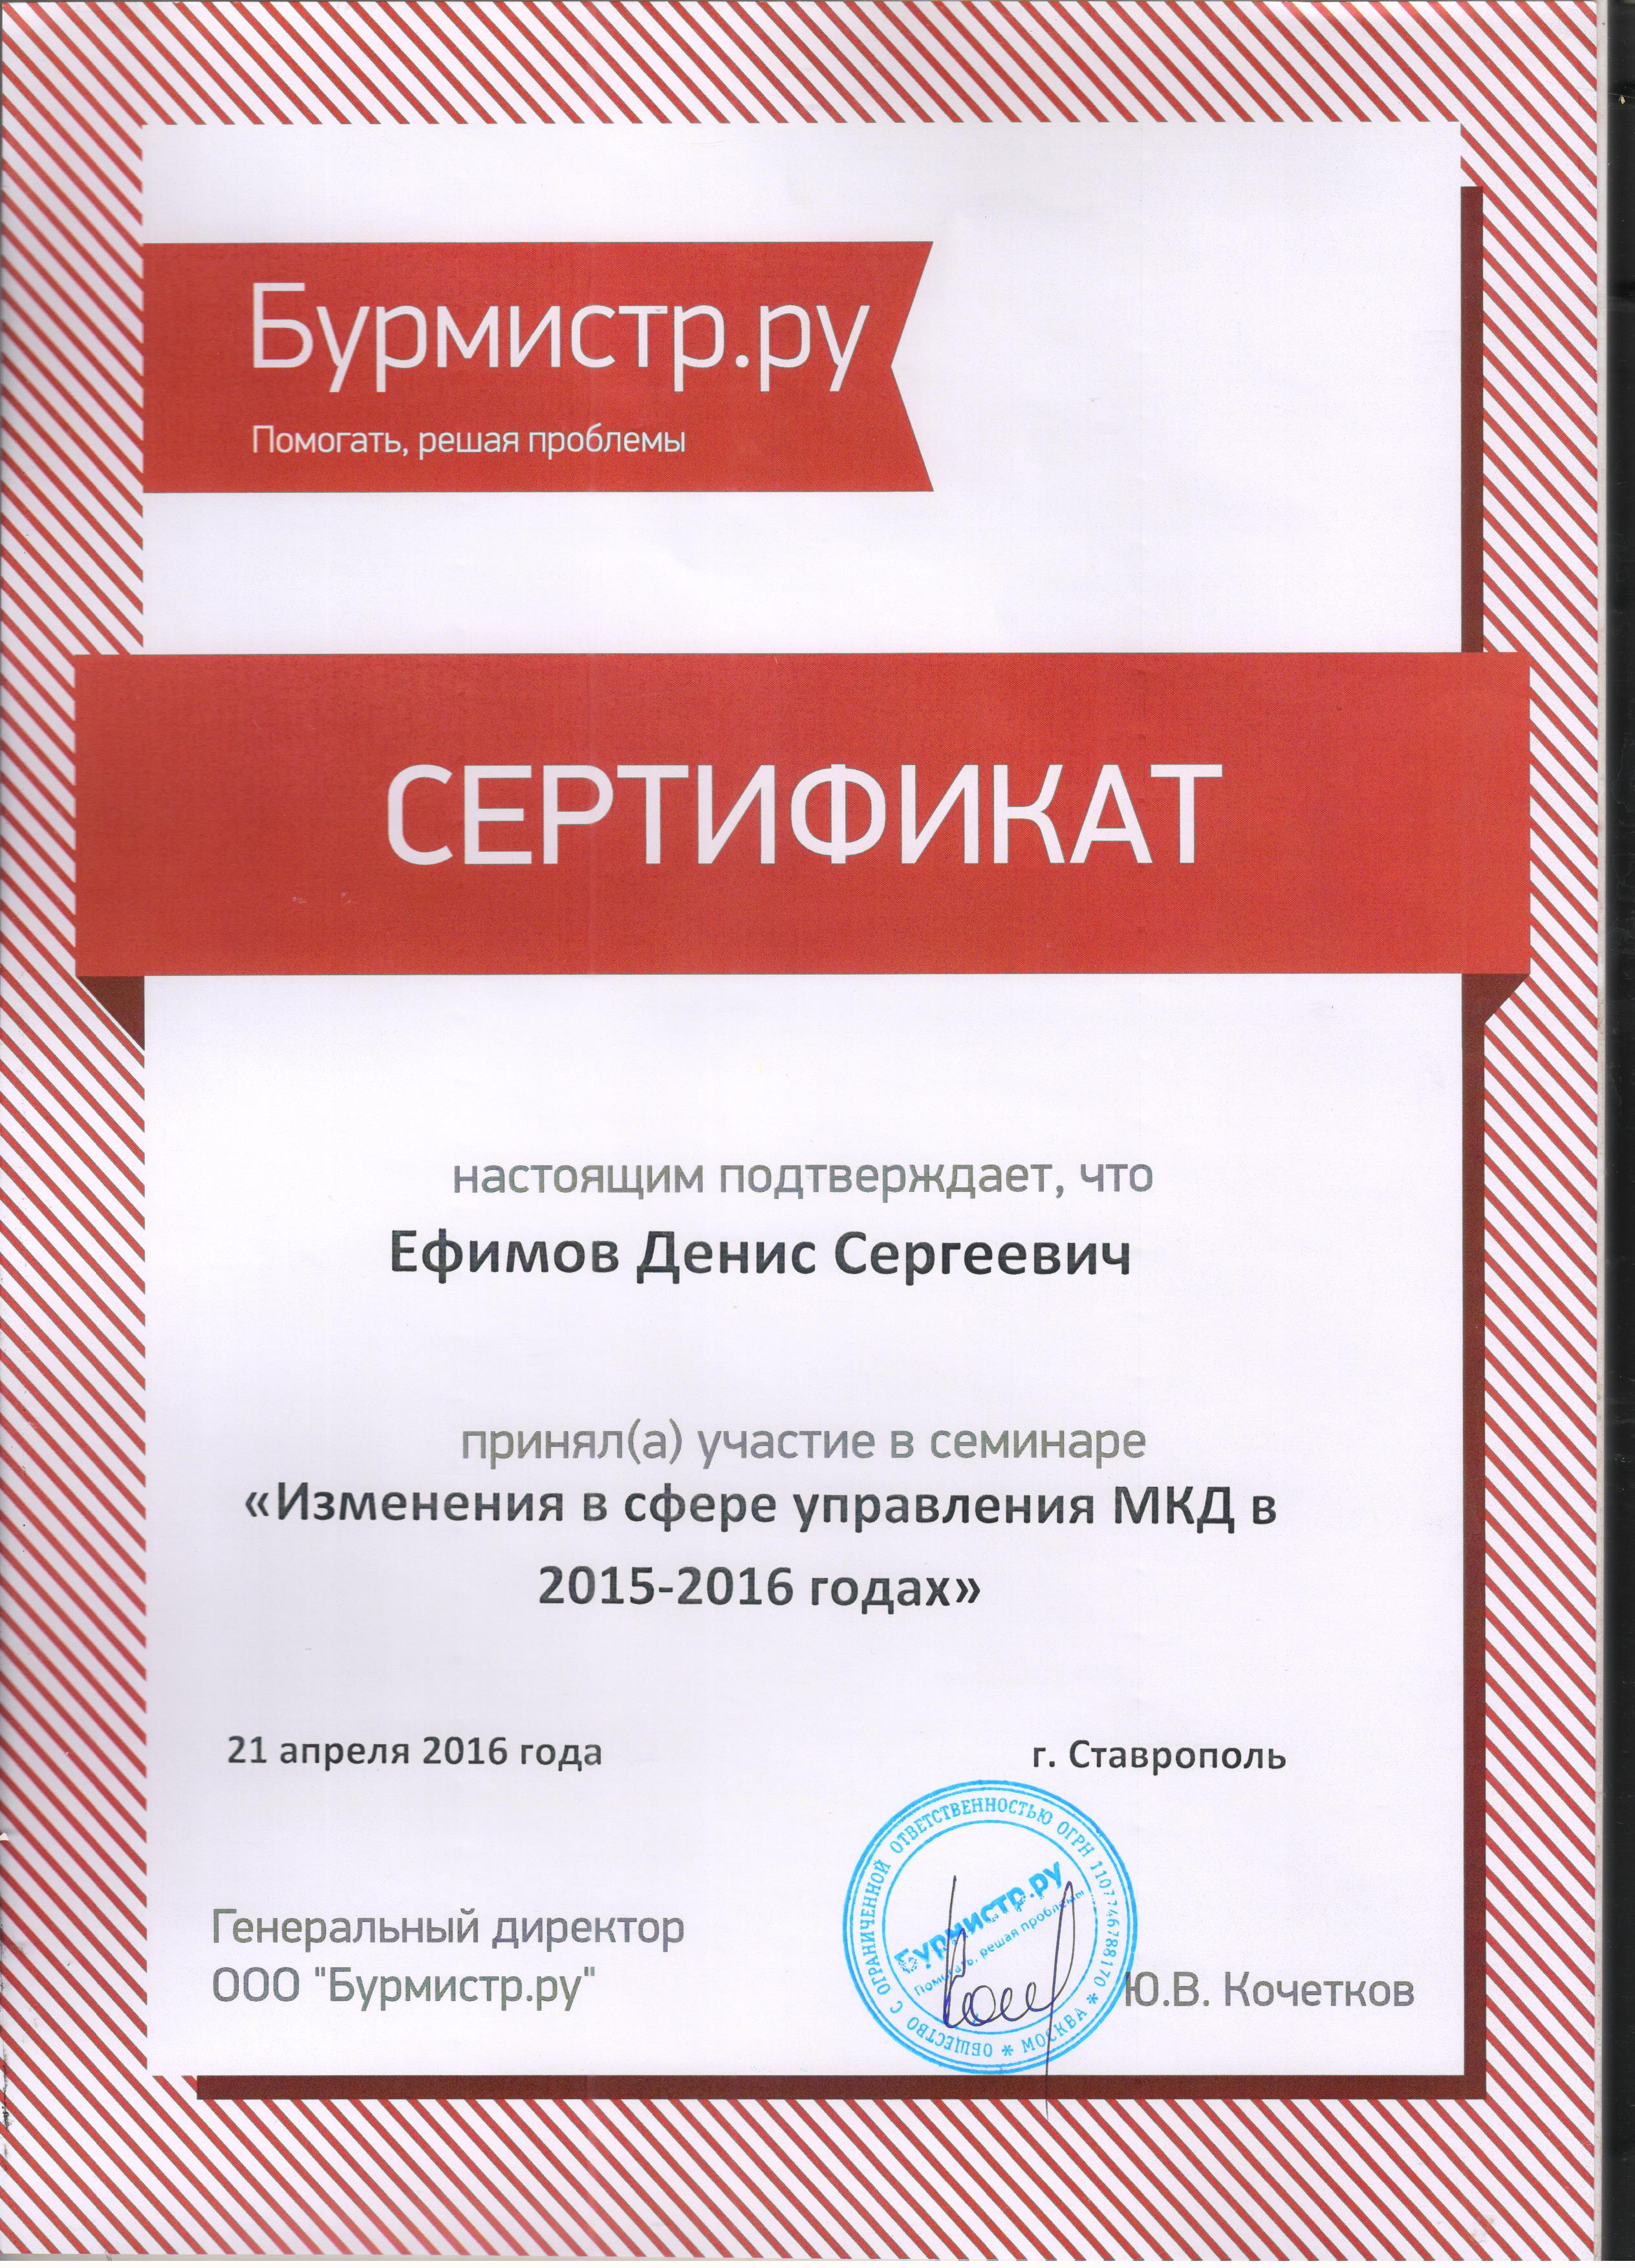 Сертификаты Бурмистр.ру